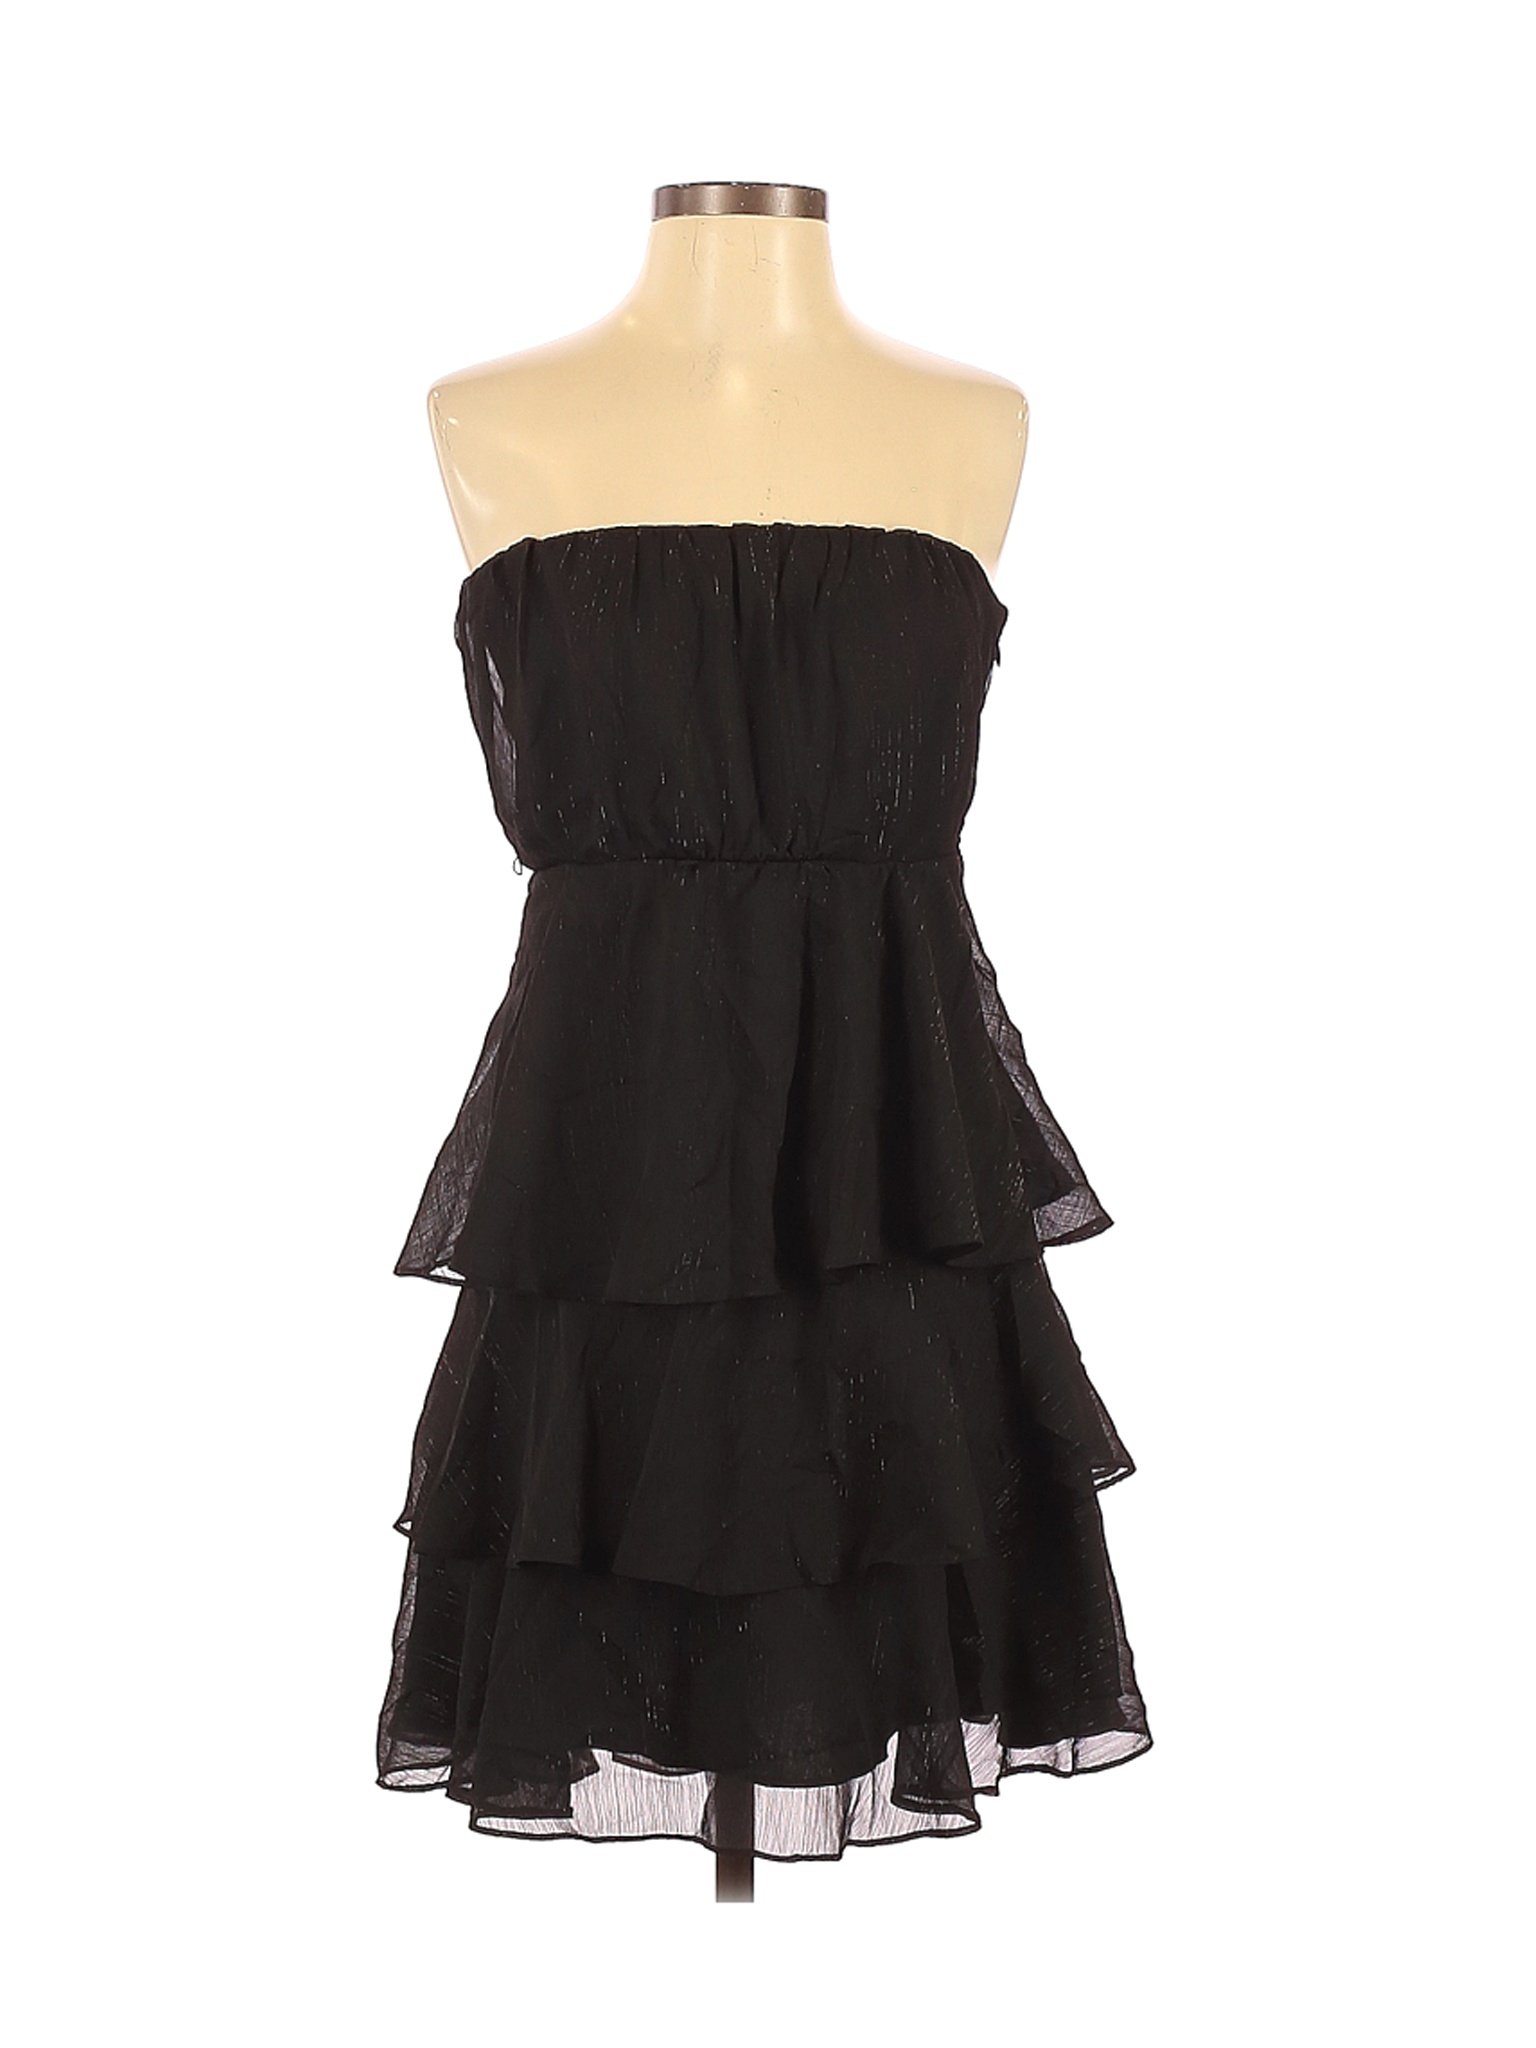 Wishes Wishes Wishes Women Black Cocktail Dress M | eBay